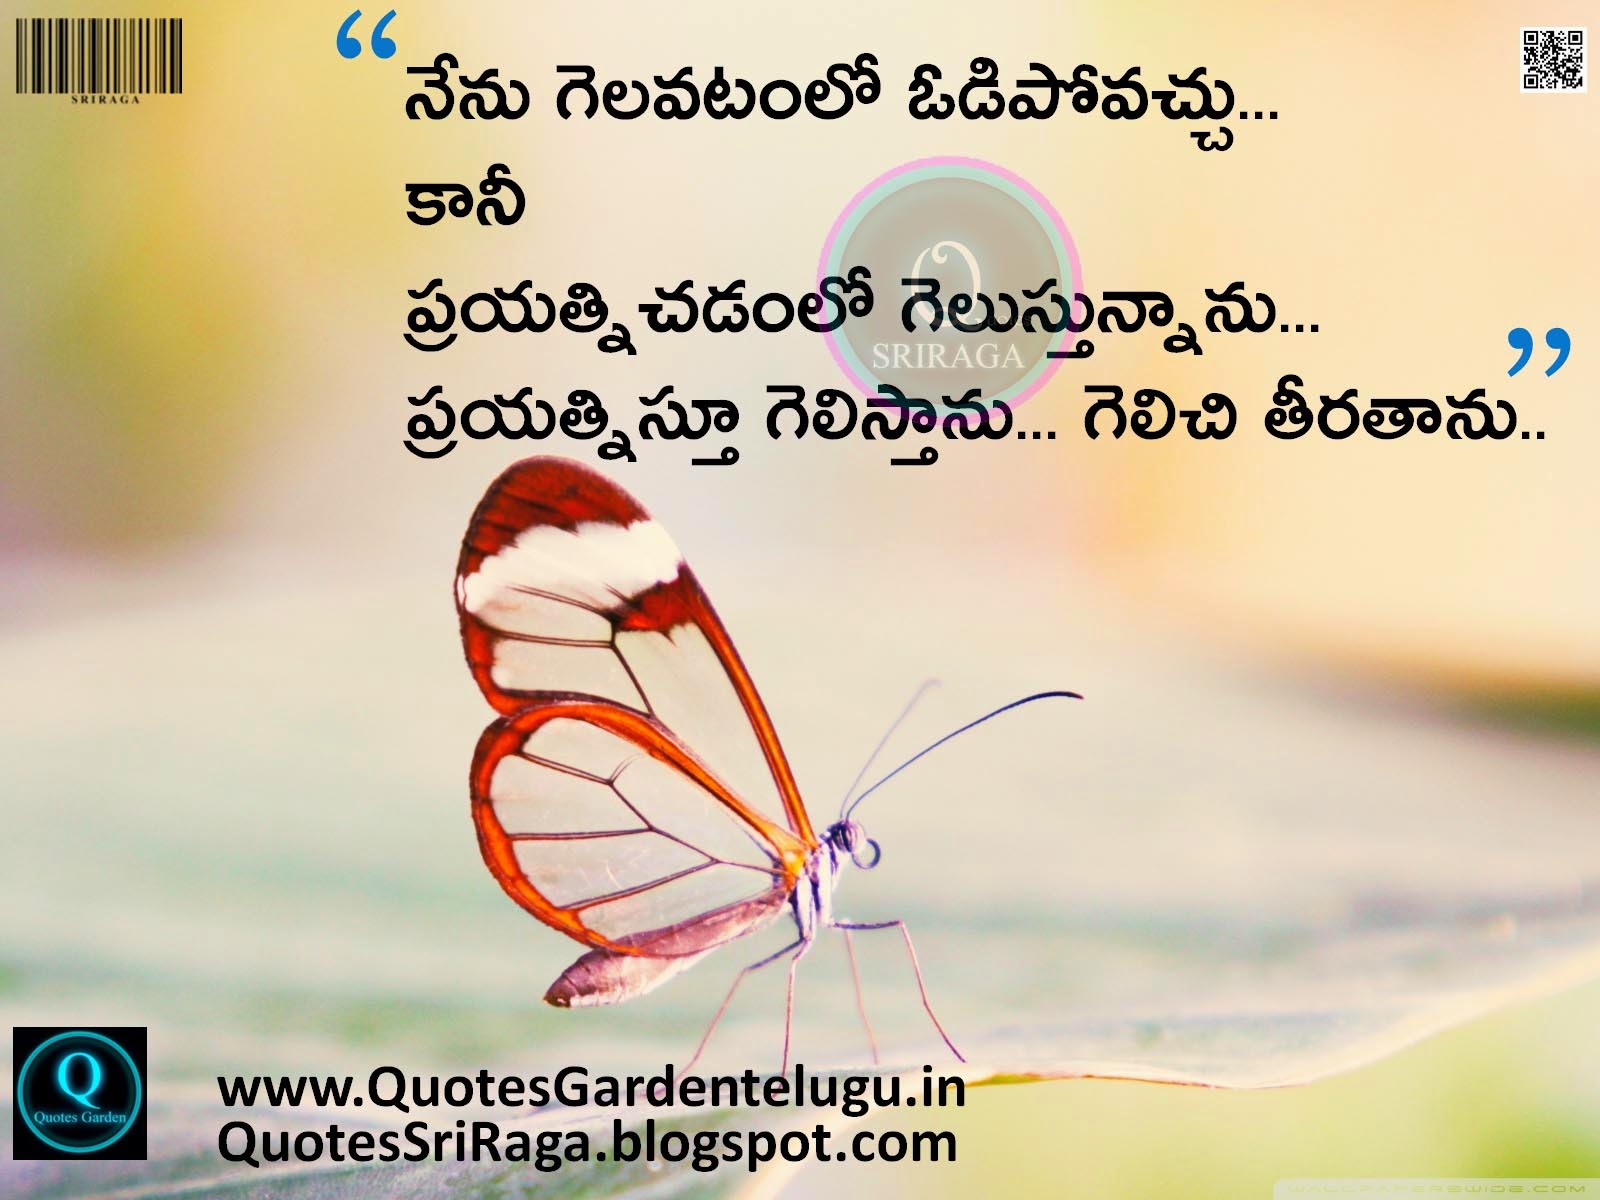 Best Telugu Inspirational Quotes Top Telugu Victory Quotes